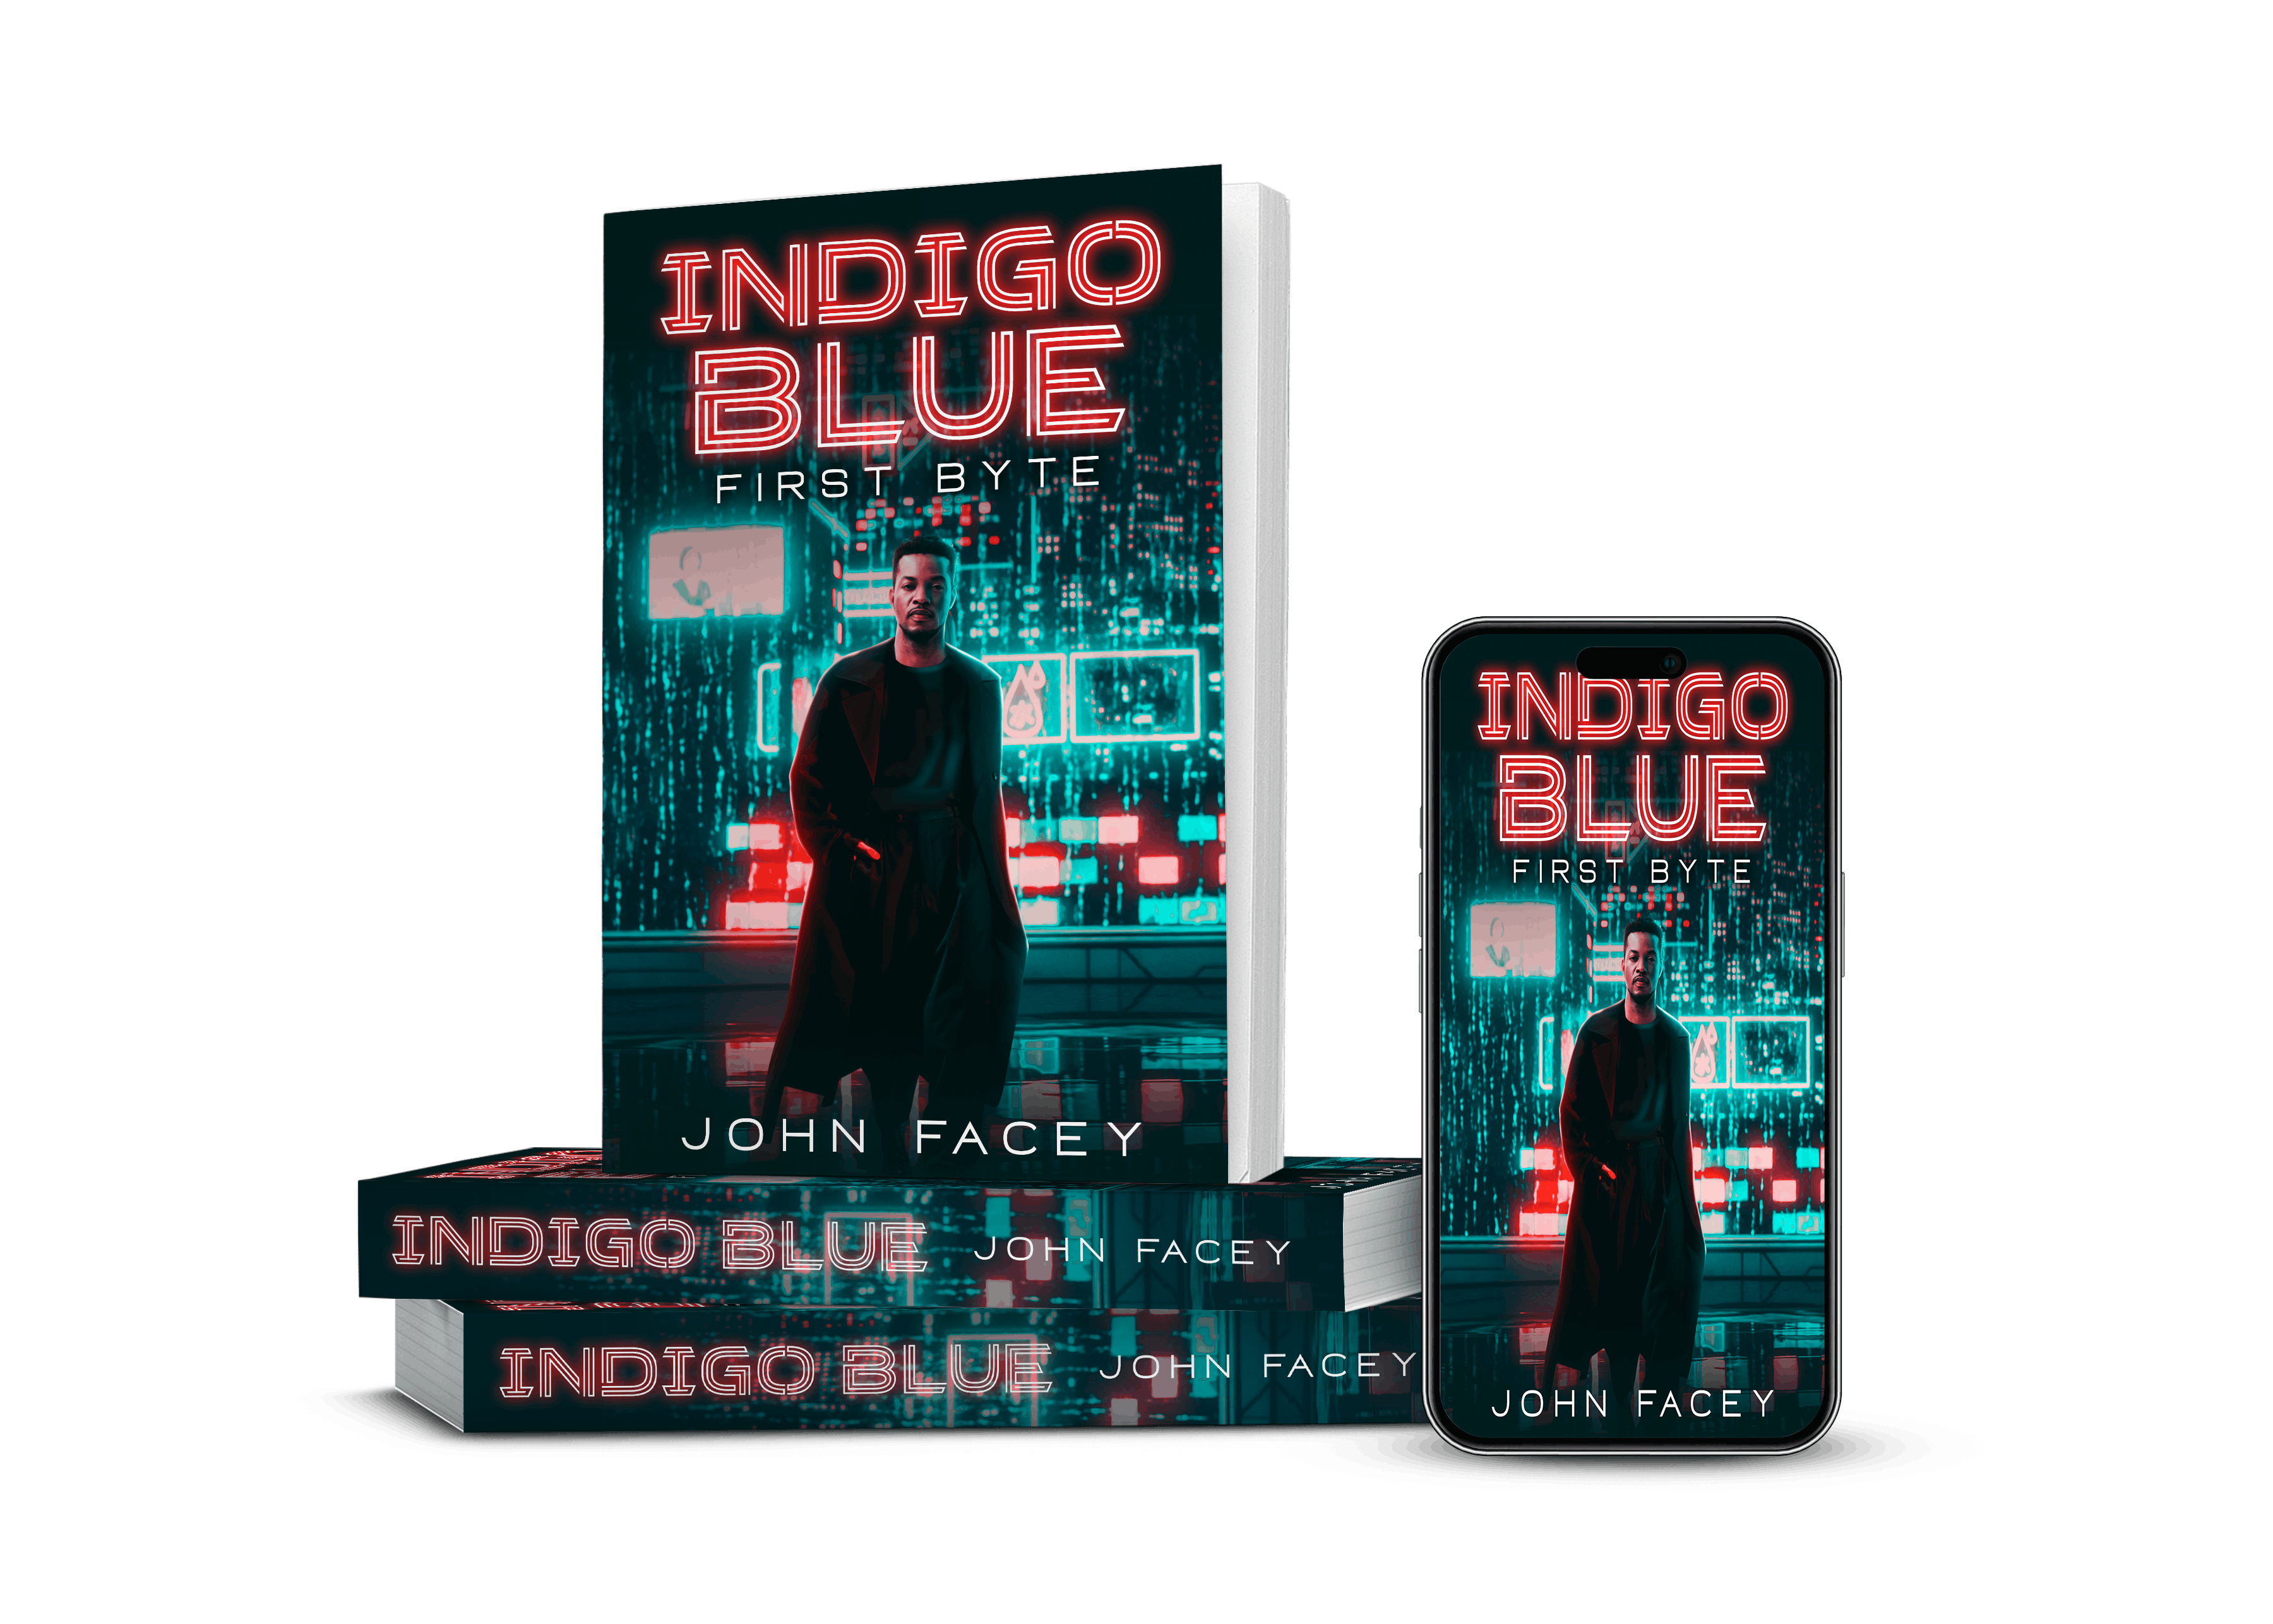 Check out Indigo Blue on Amazon/Kindle